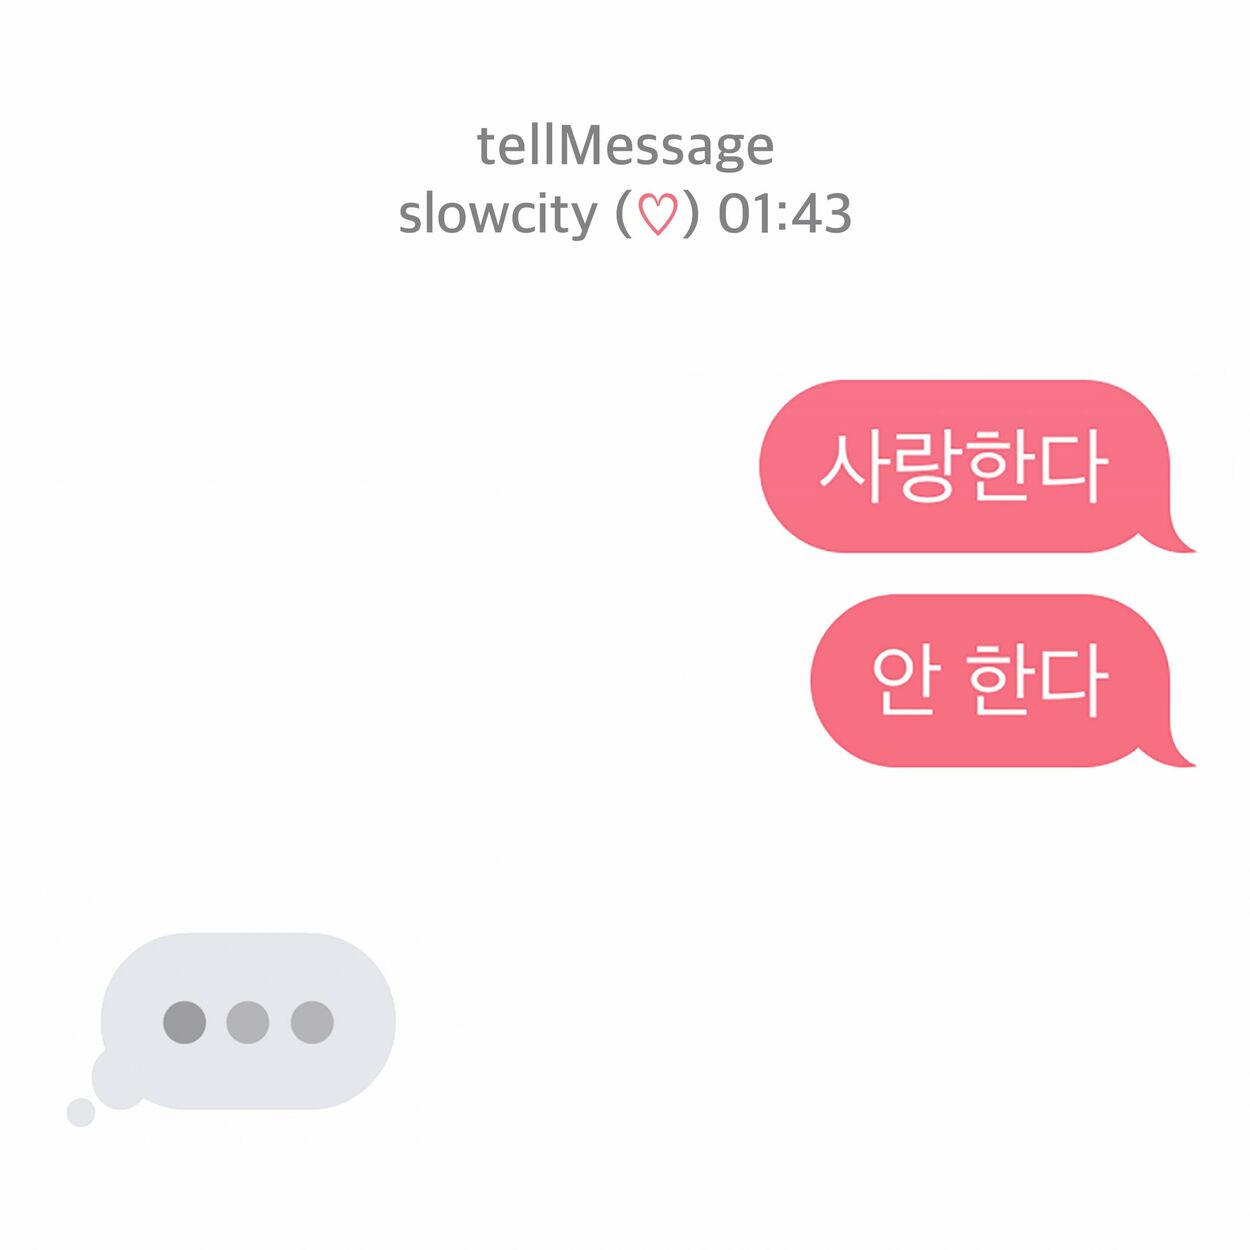 Slowcity – 143 – Single